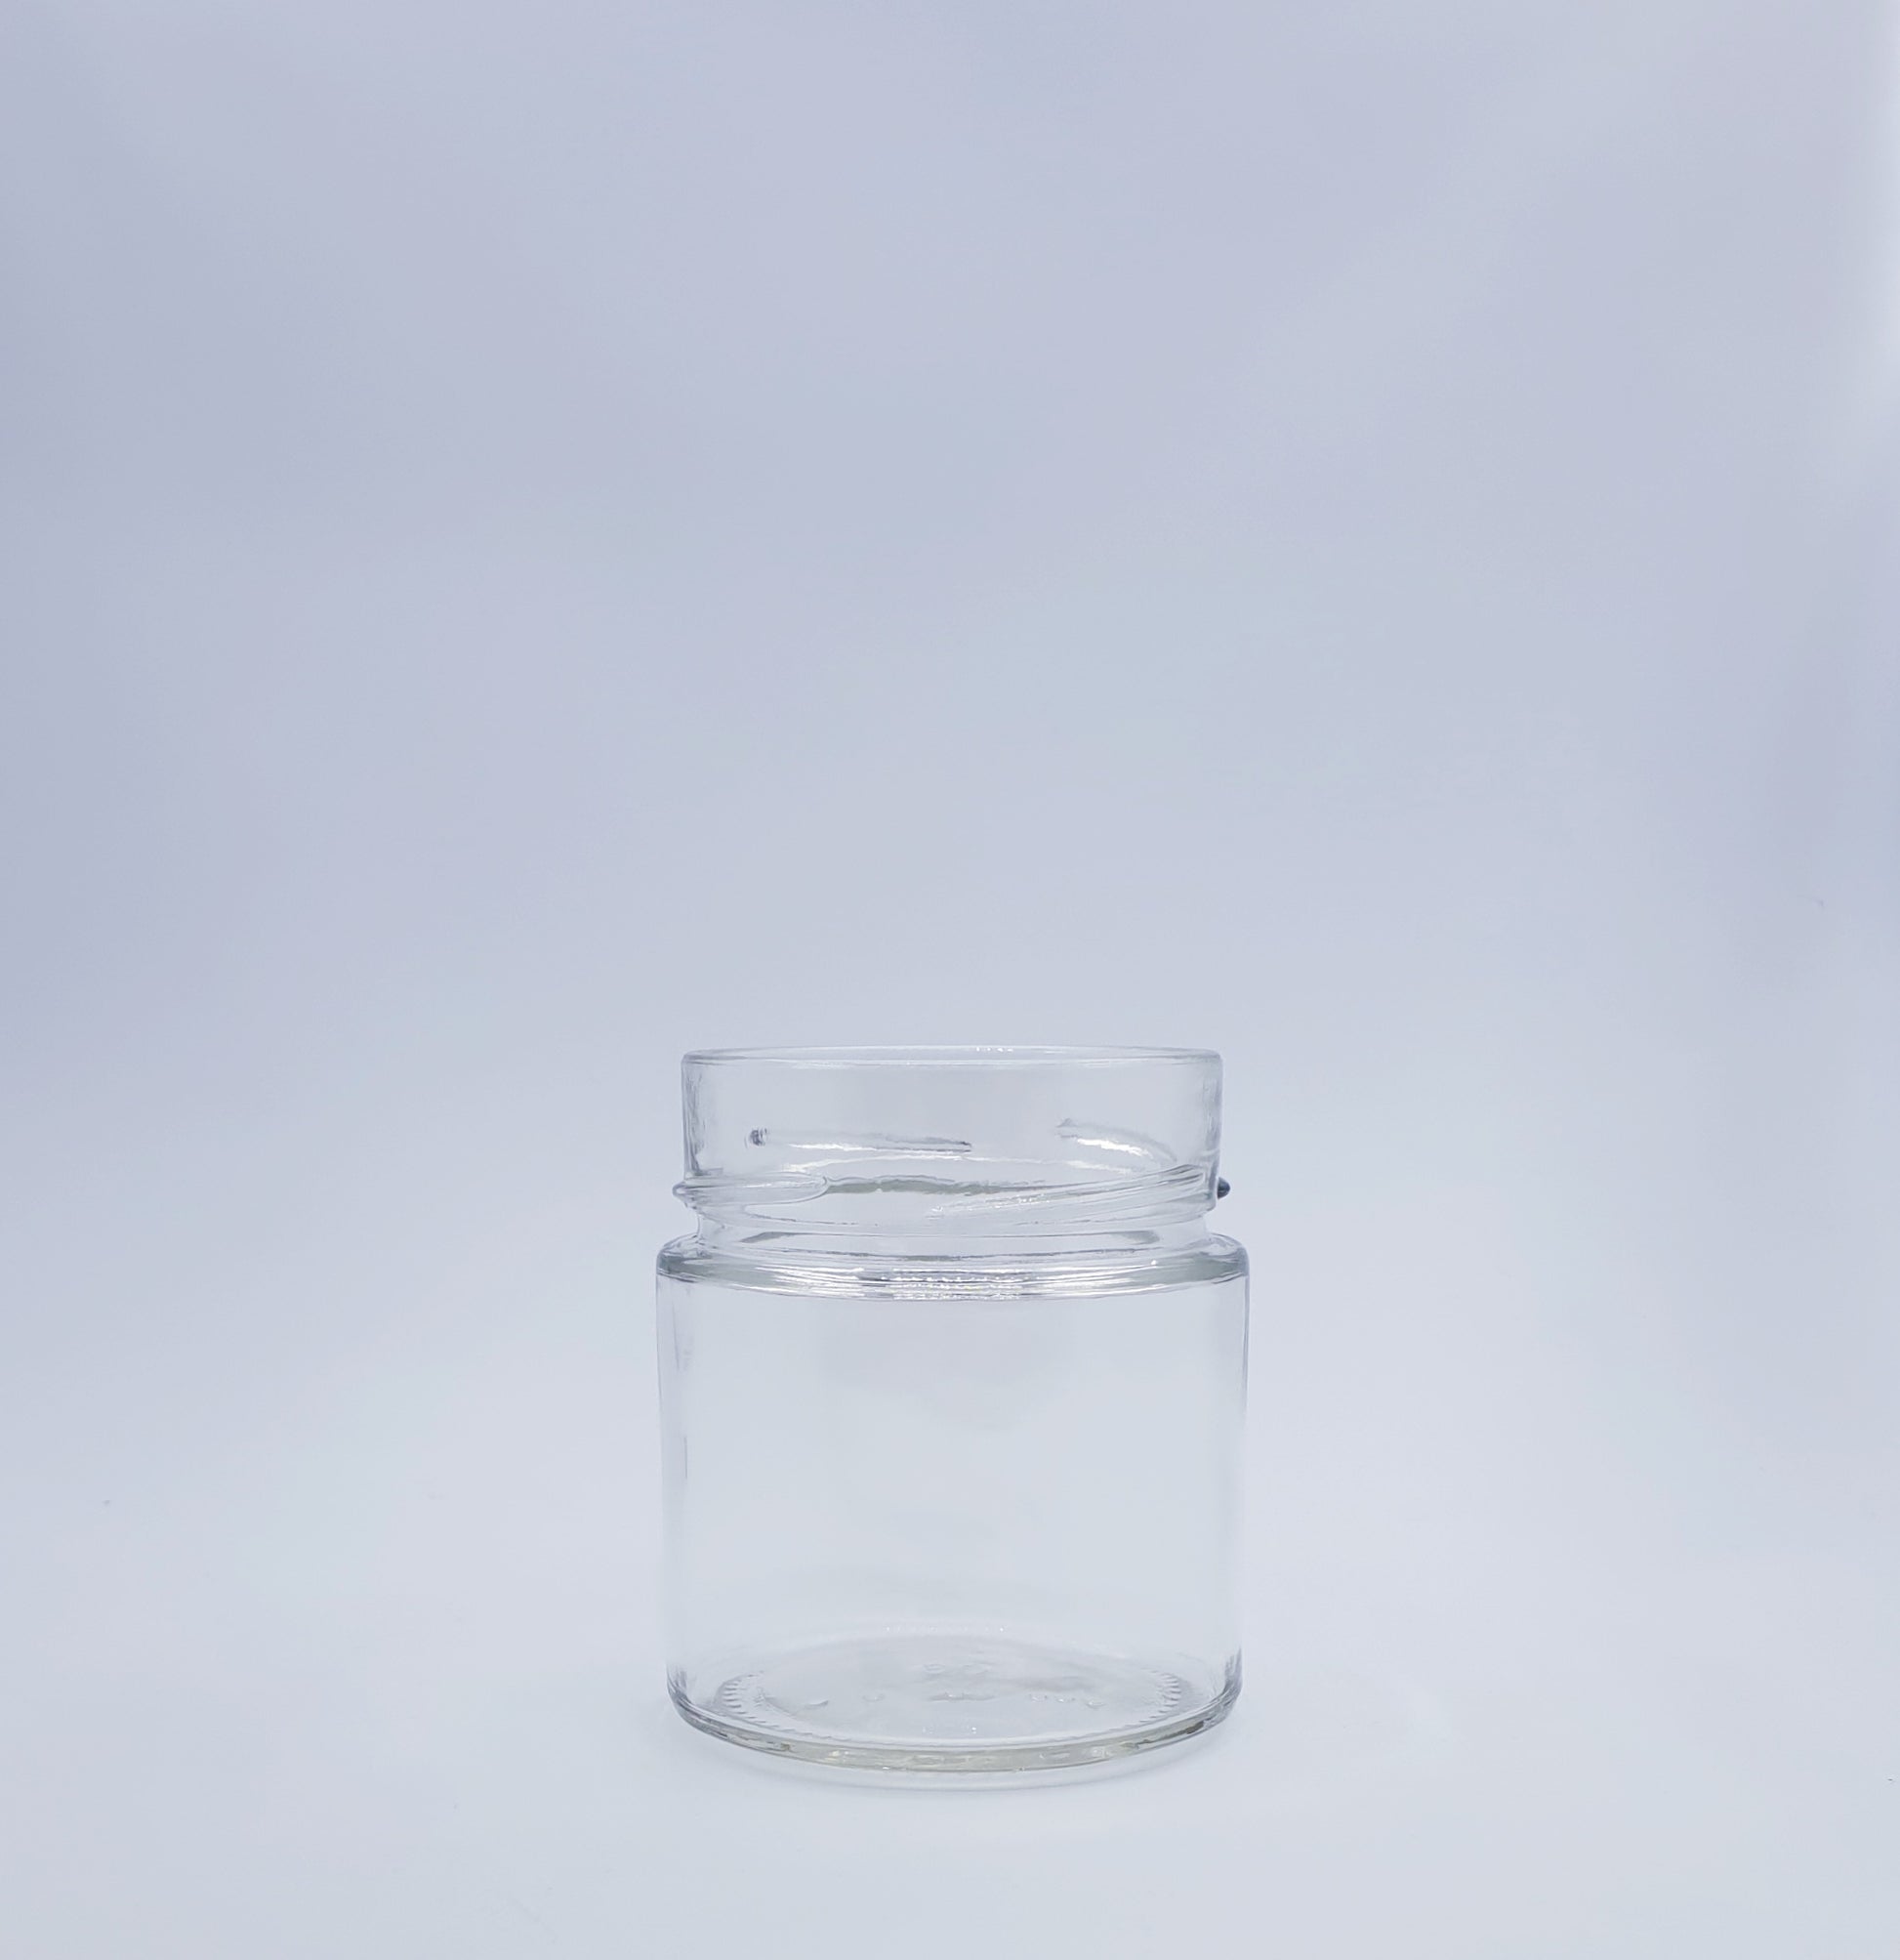 212ml ergo flint round glass jar. takes up to 250gms of honey